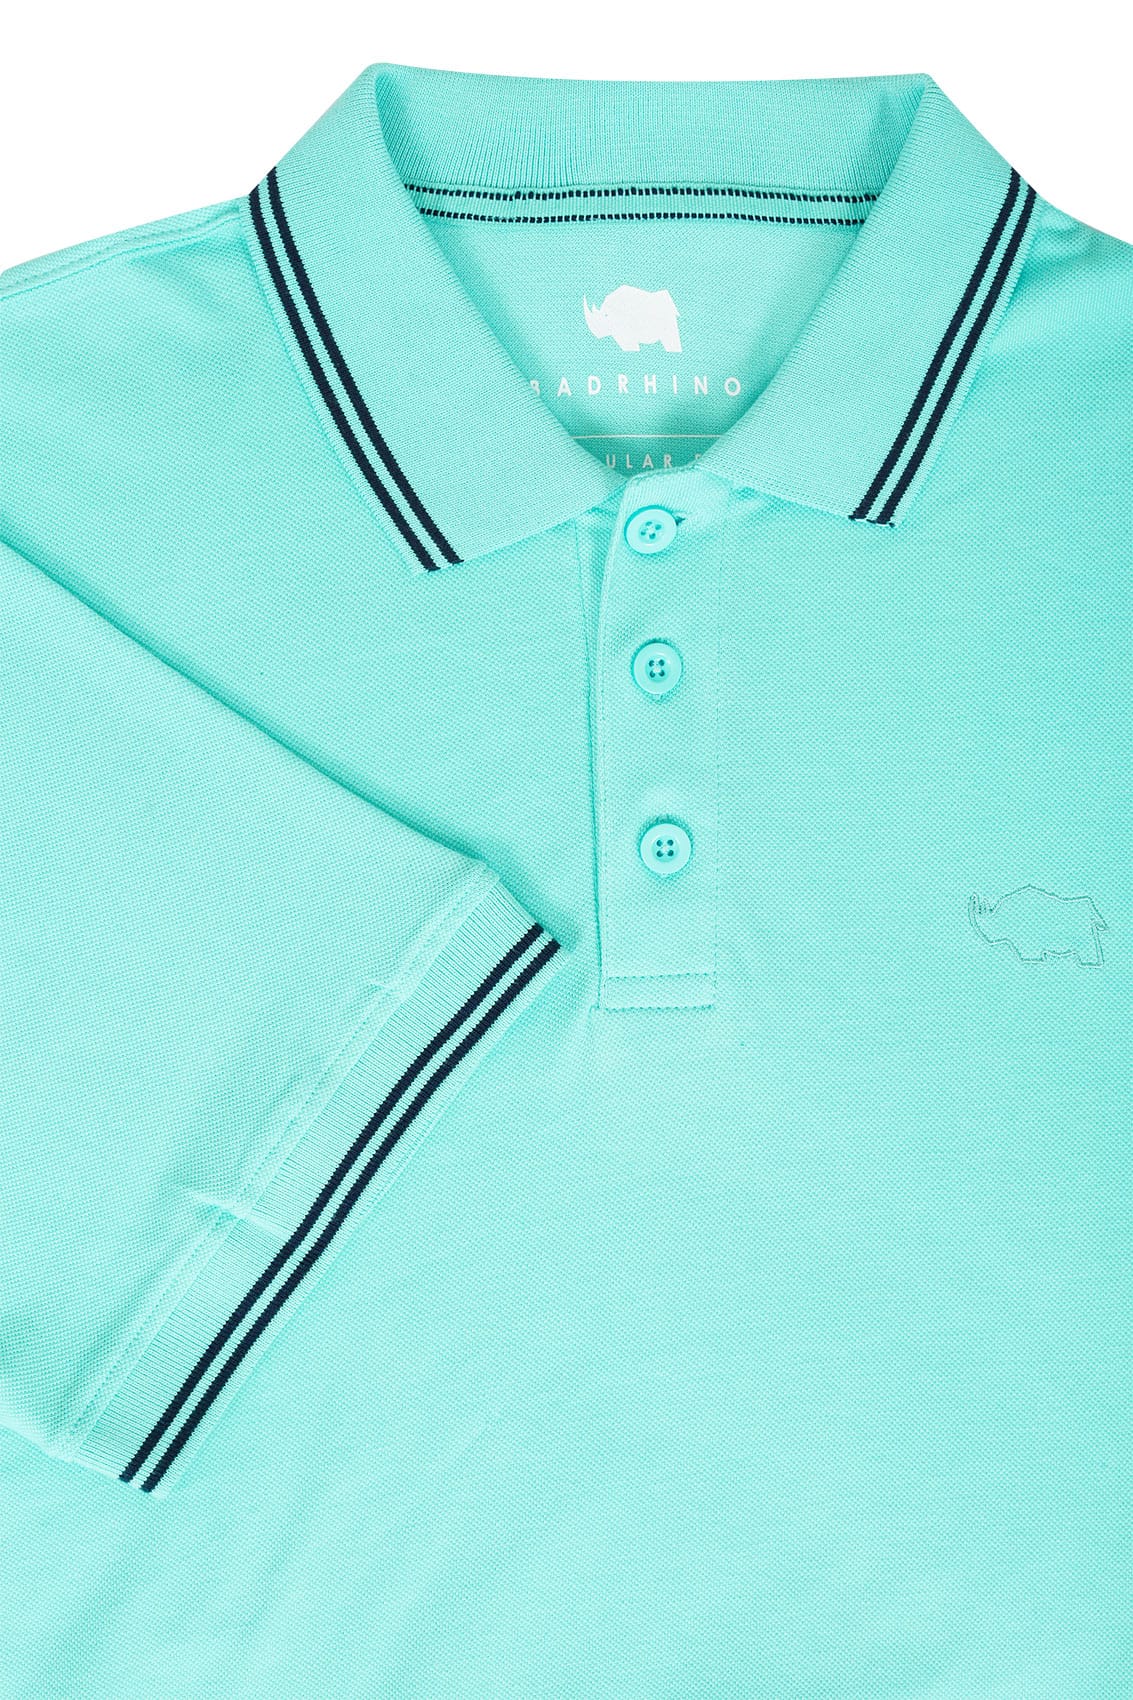 BadRhino Aqua Blue Polo Shirt With White Stripe Detail - TALL